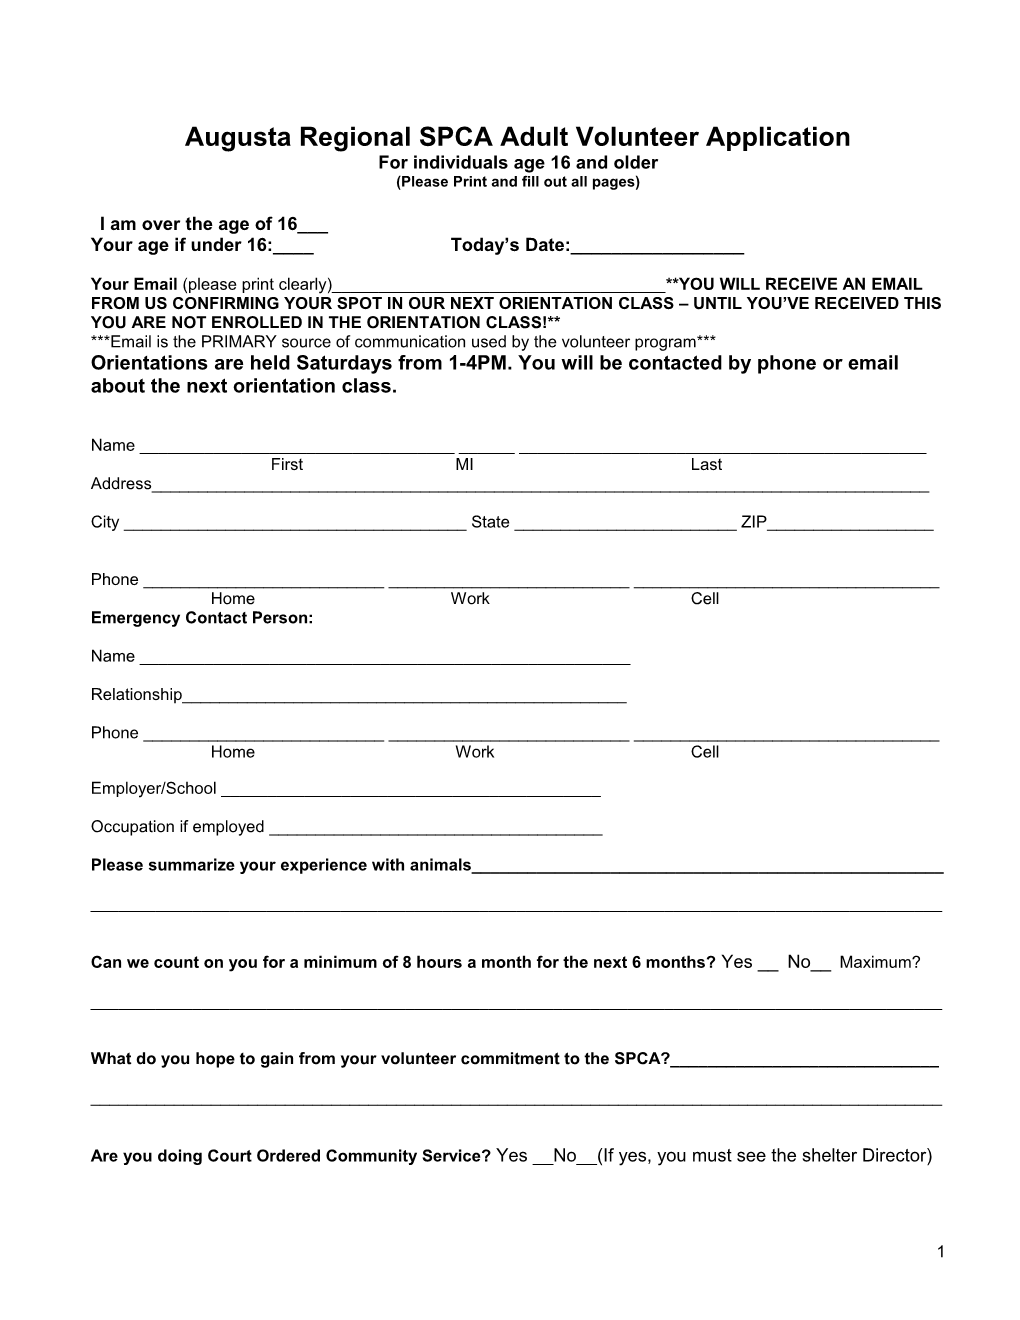 Augusta Regional SPCA Adult Volunteer Application